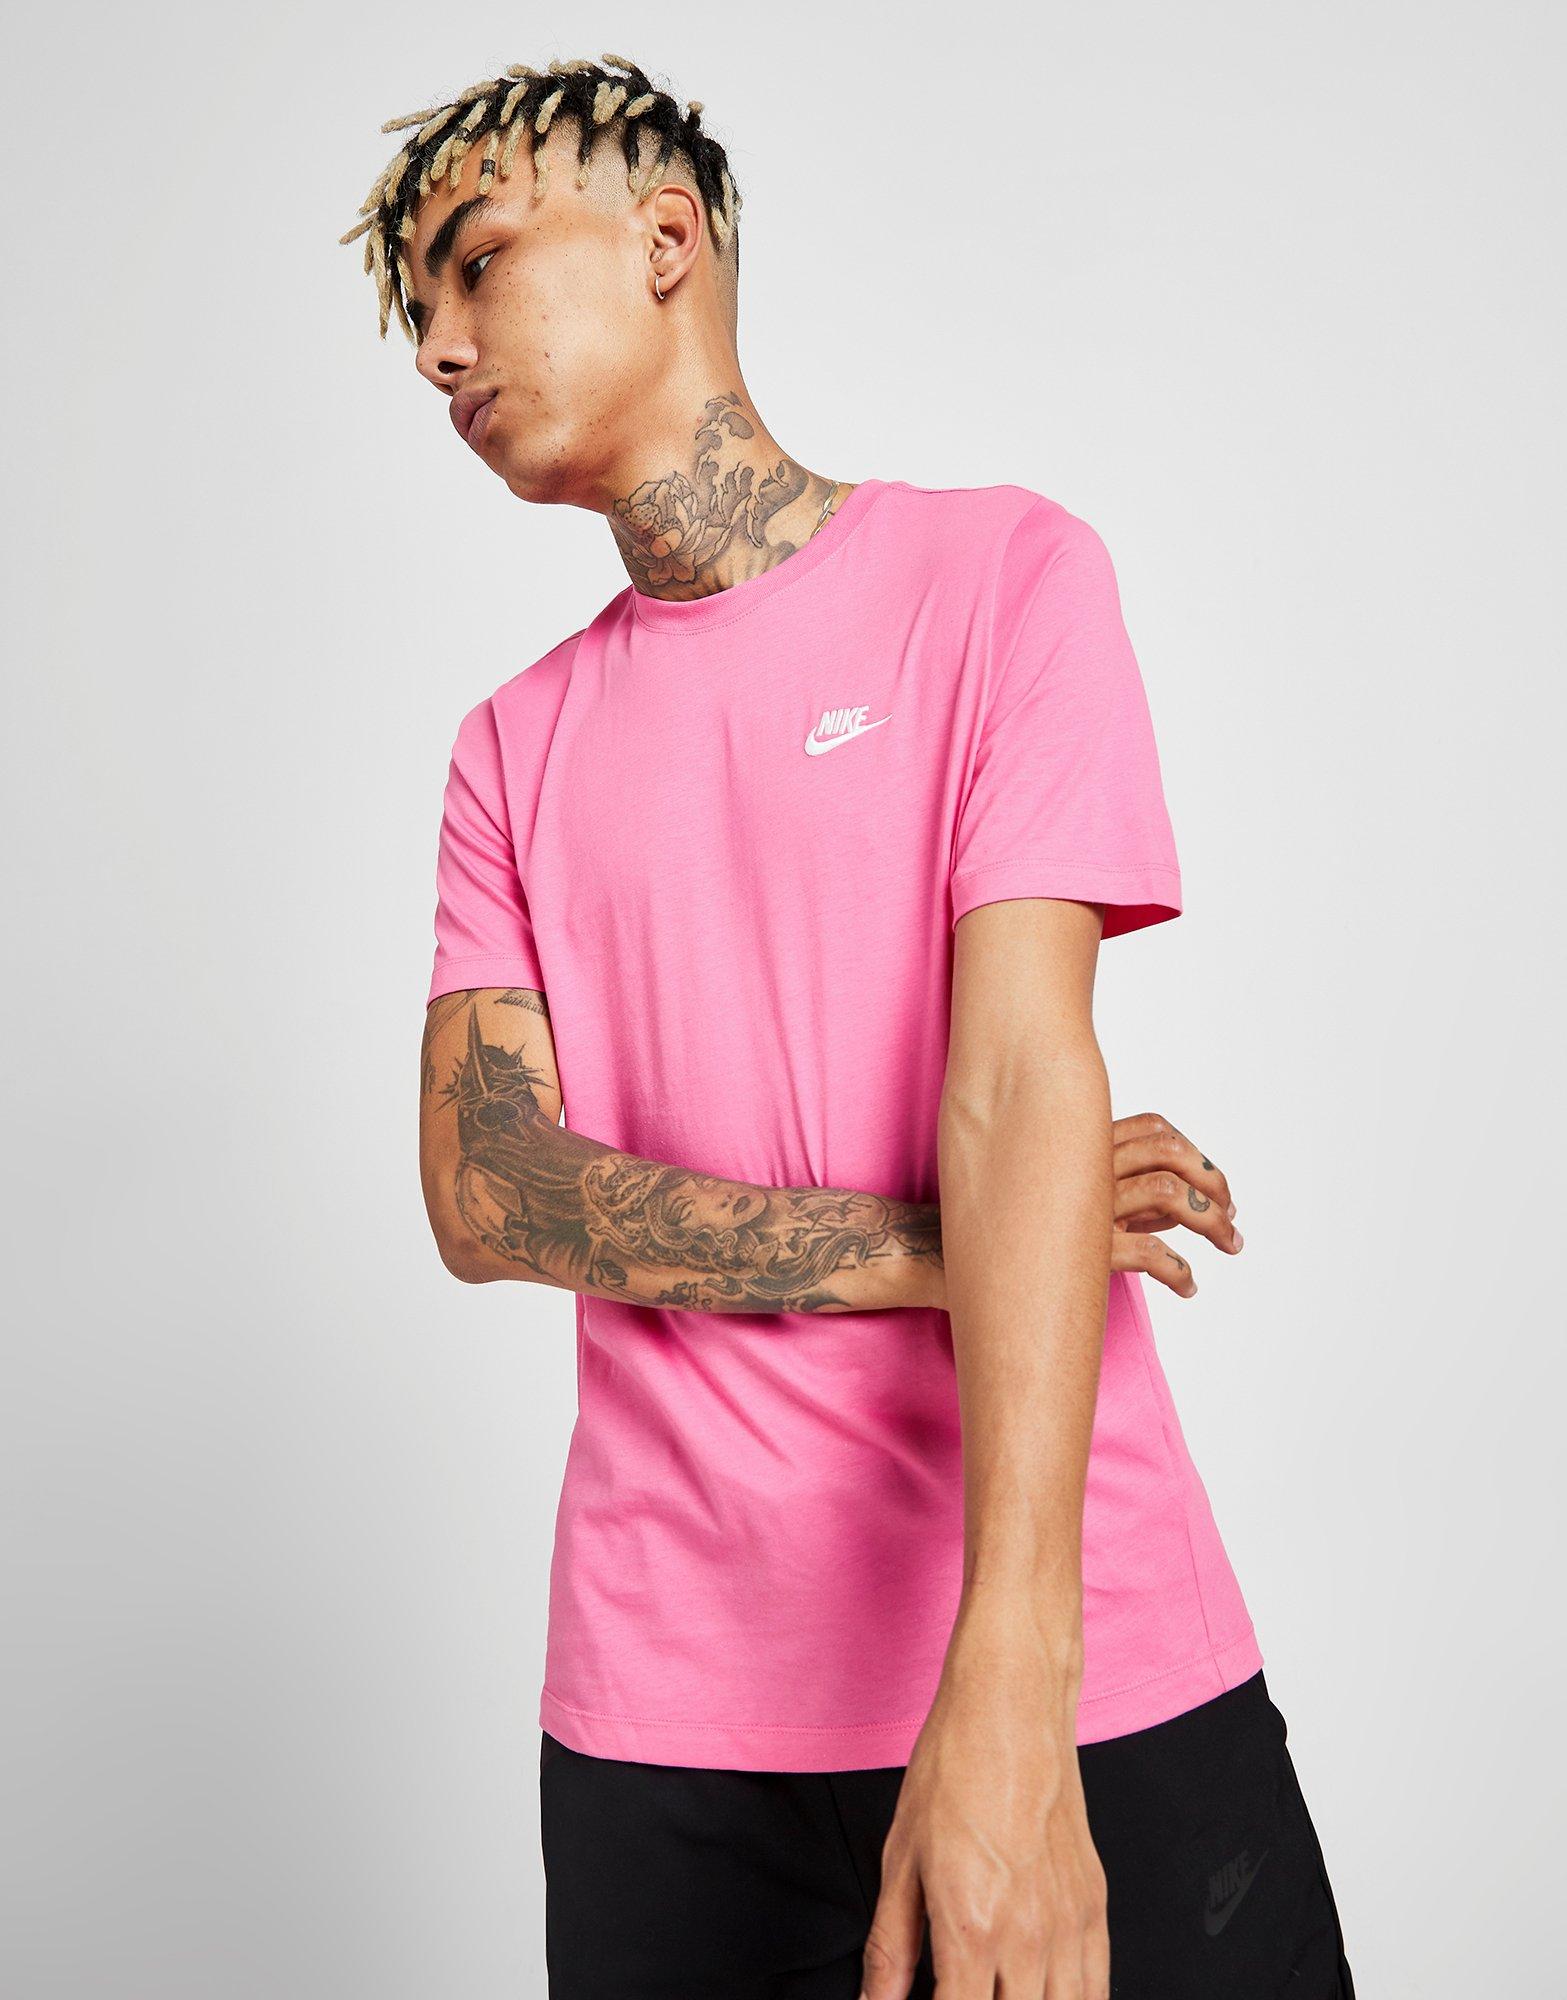 nike club t shirt pink